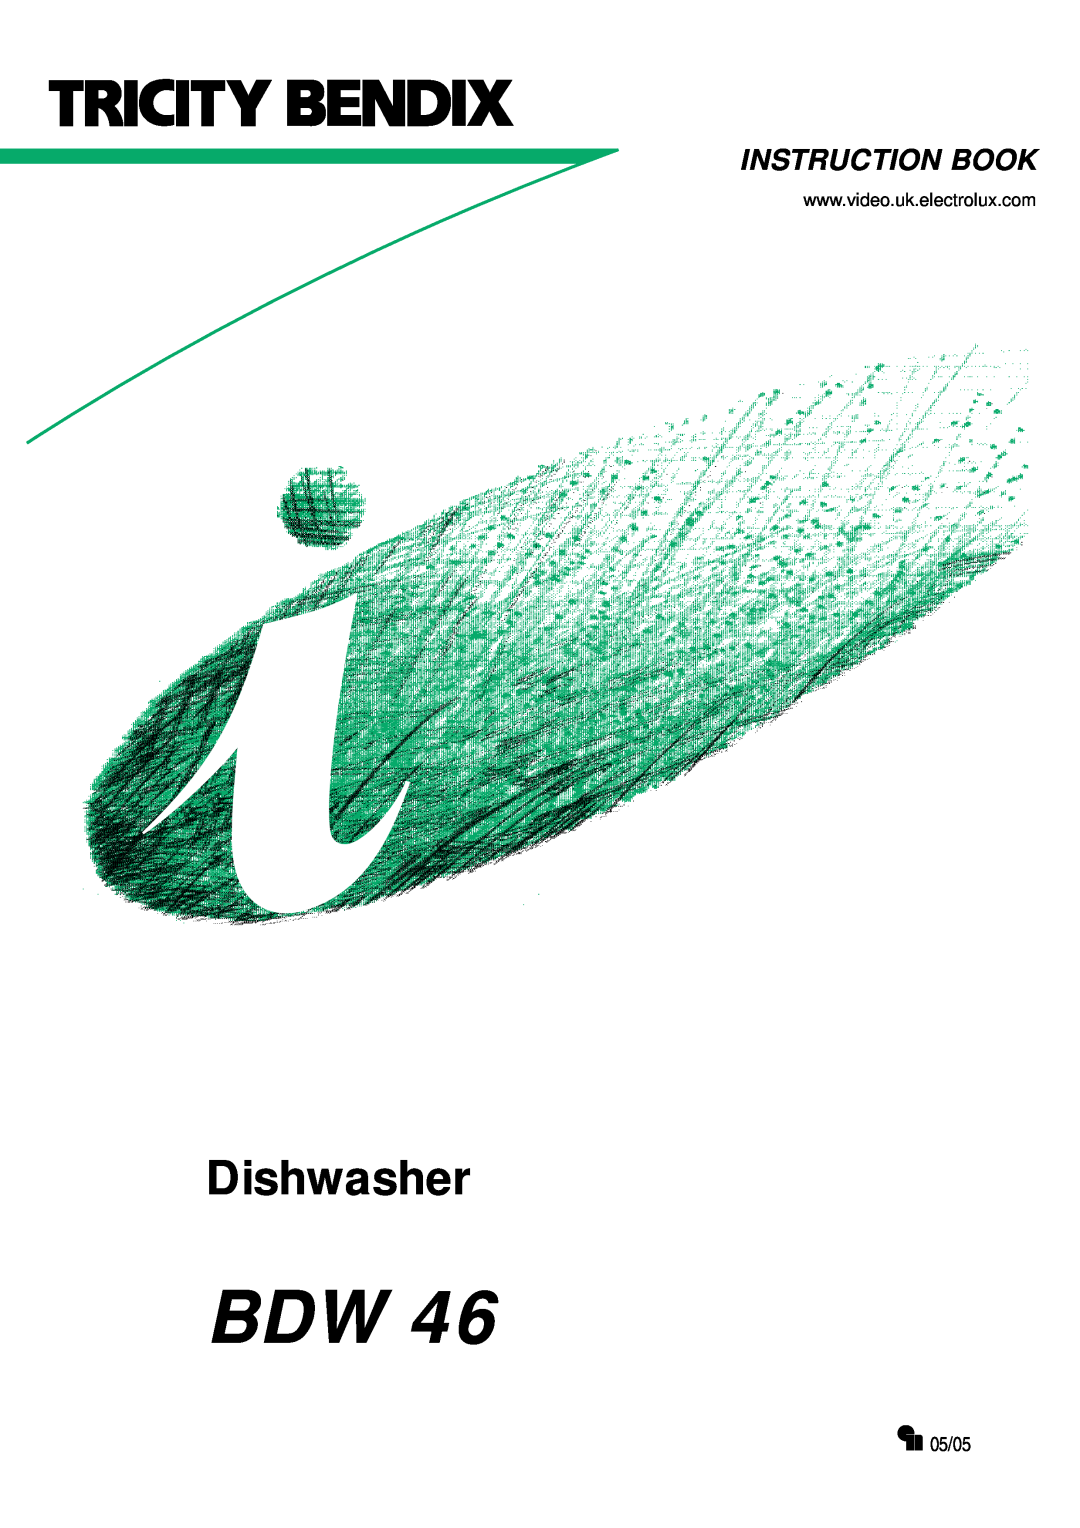 Tricity Bendix BDW 46 manual 05/05, Dishwasher, Instruction Book 